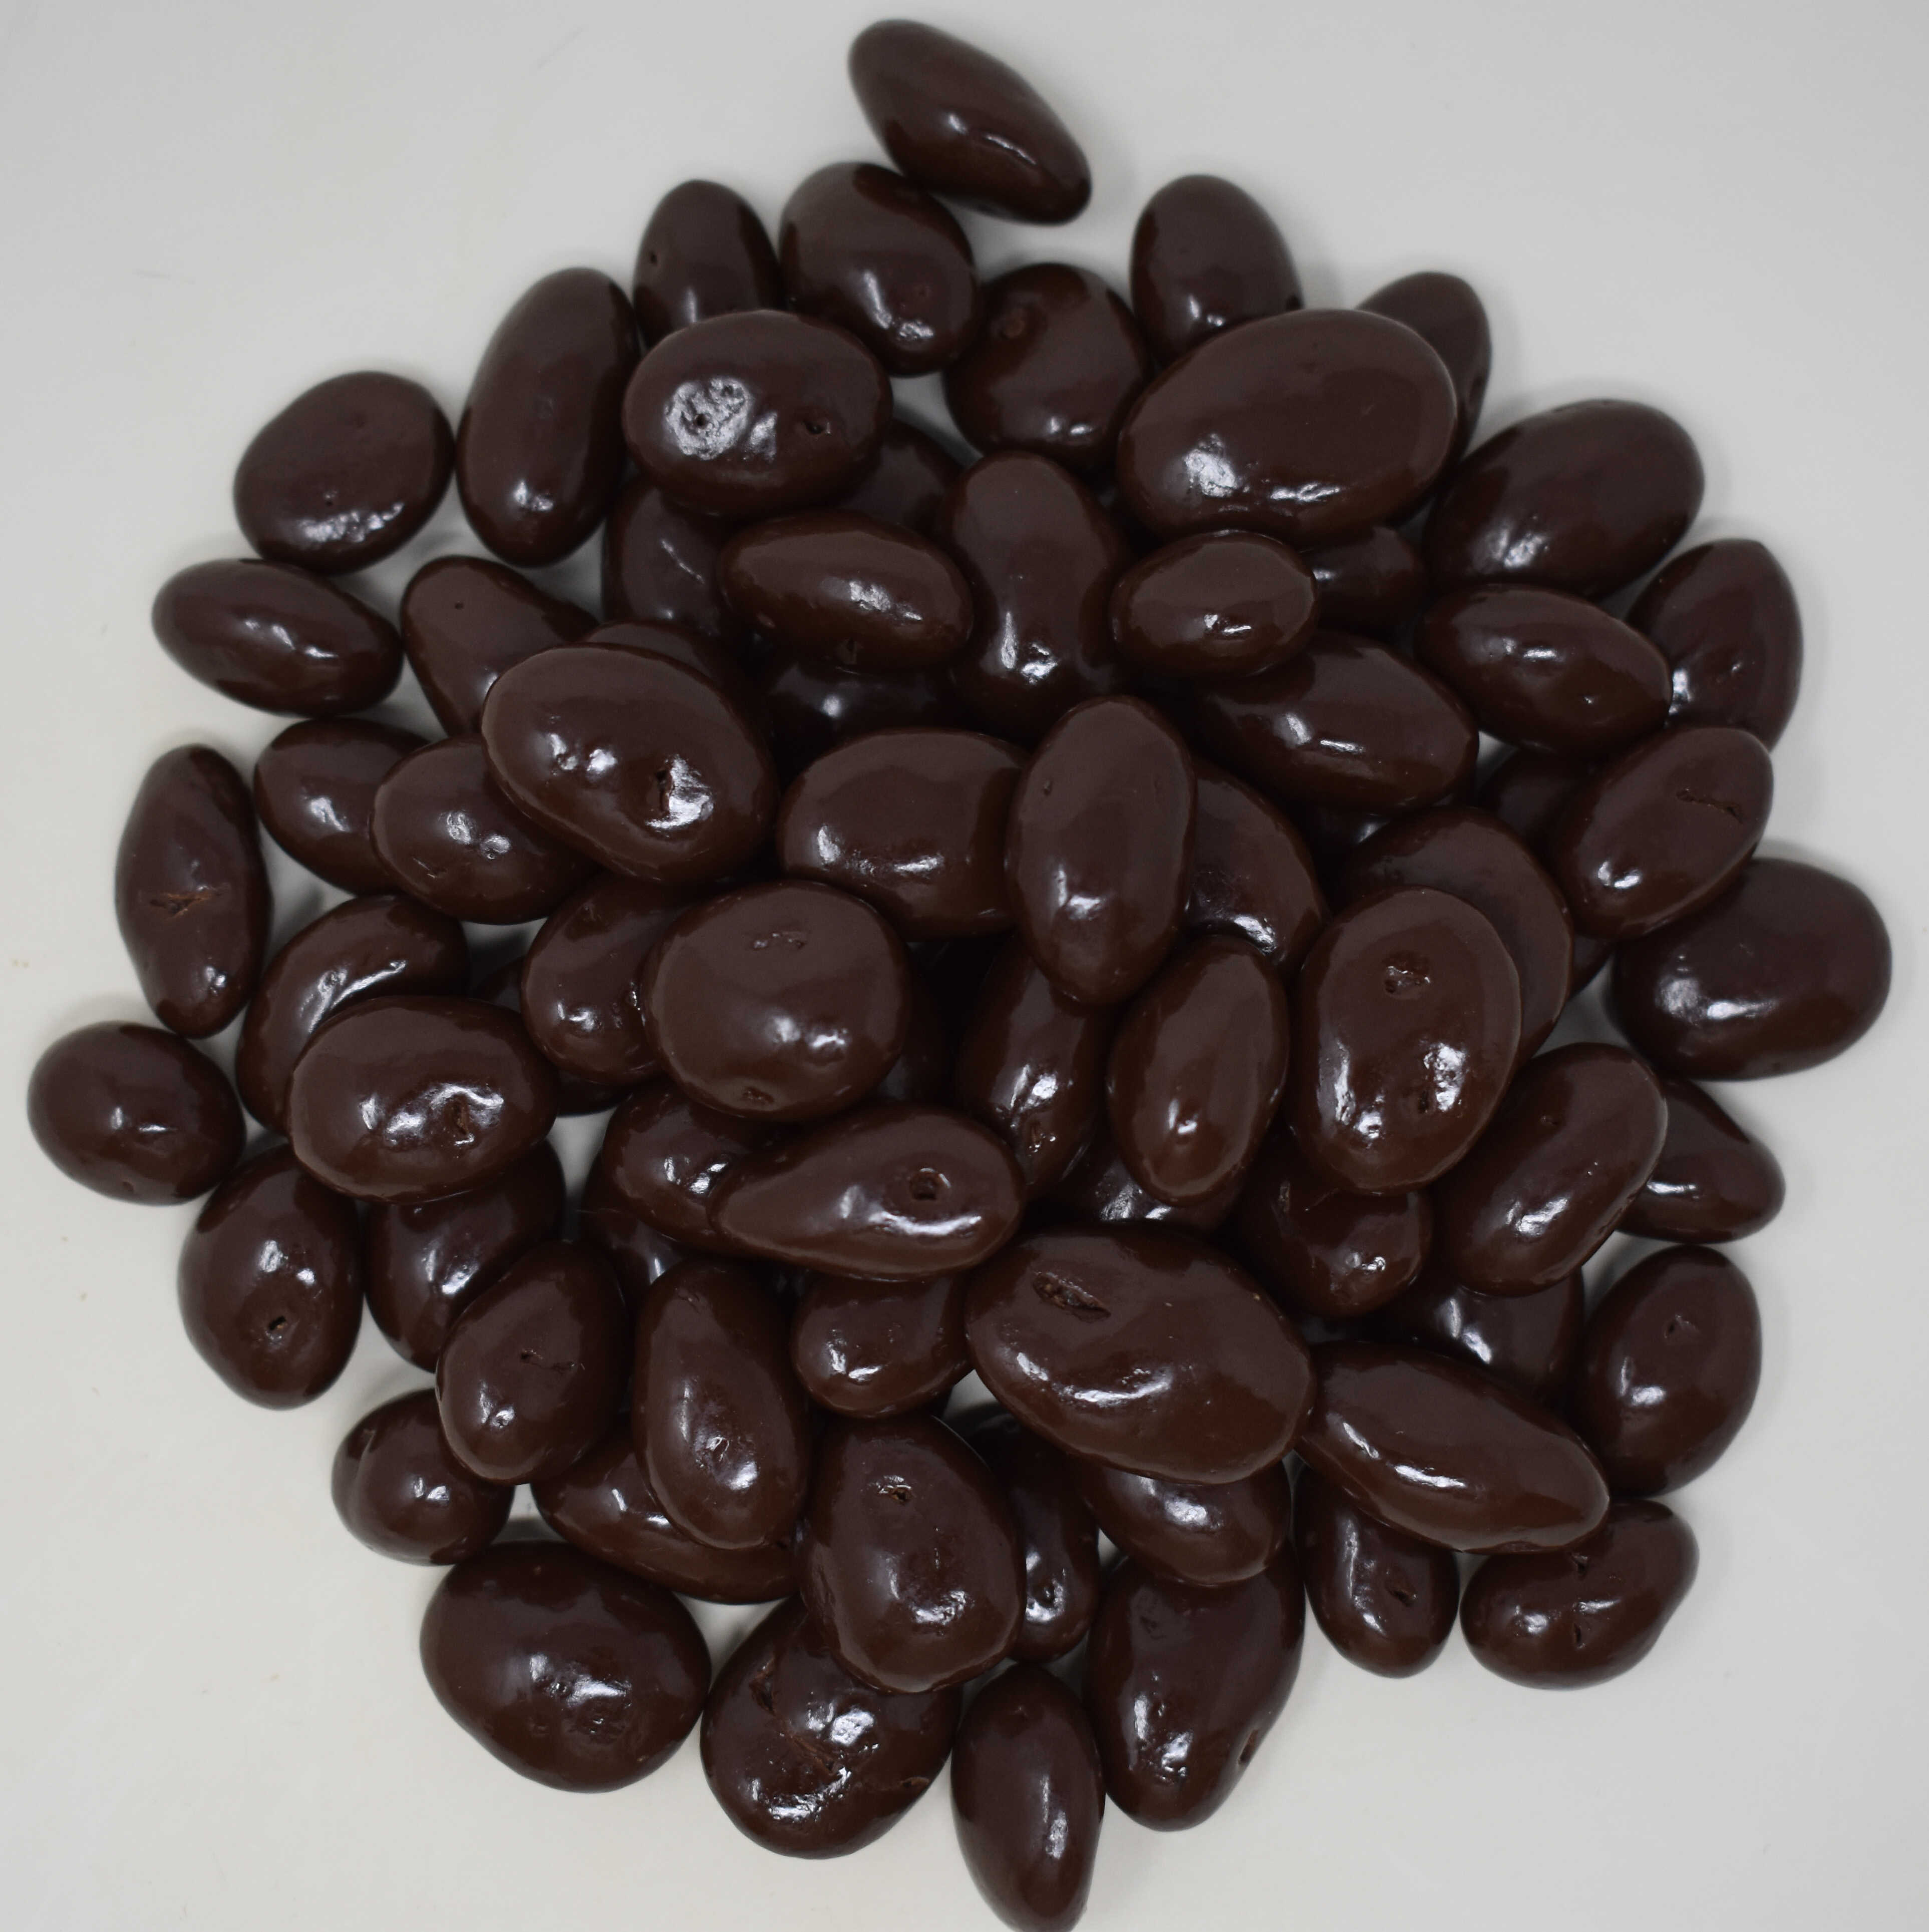 Raisins <BR>(Dark Chocolate Covered) - Top Photo